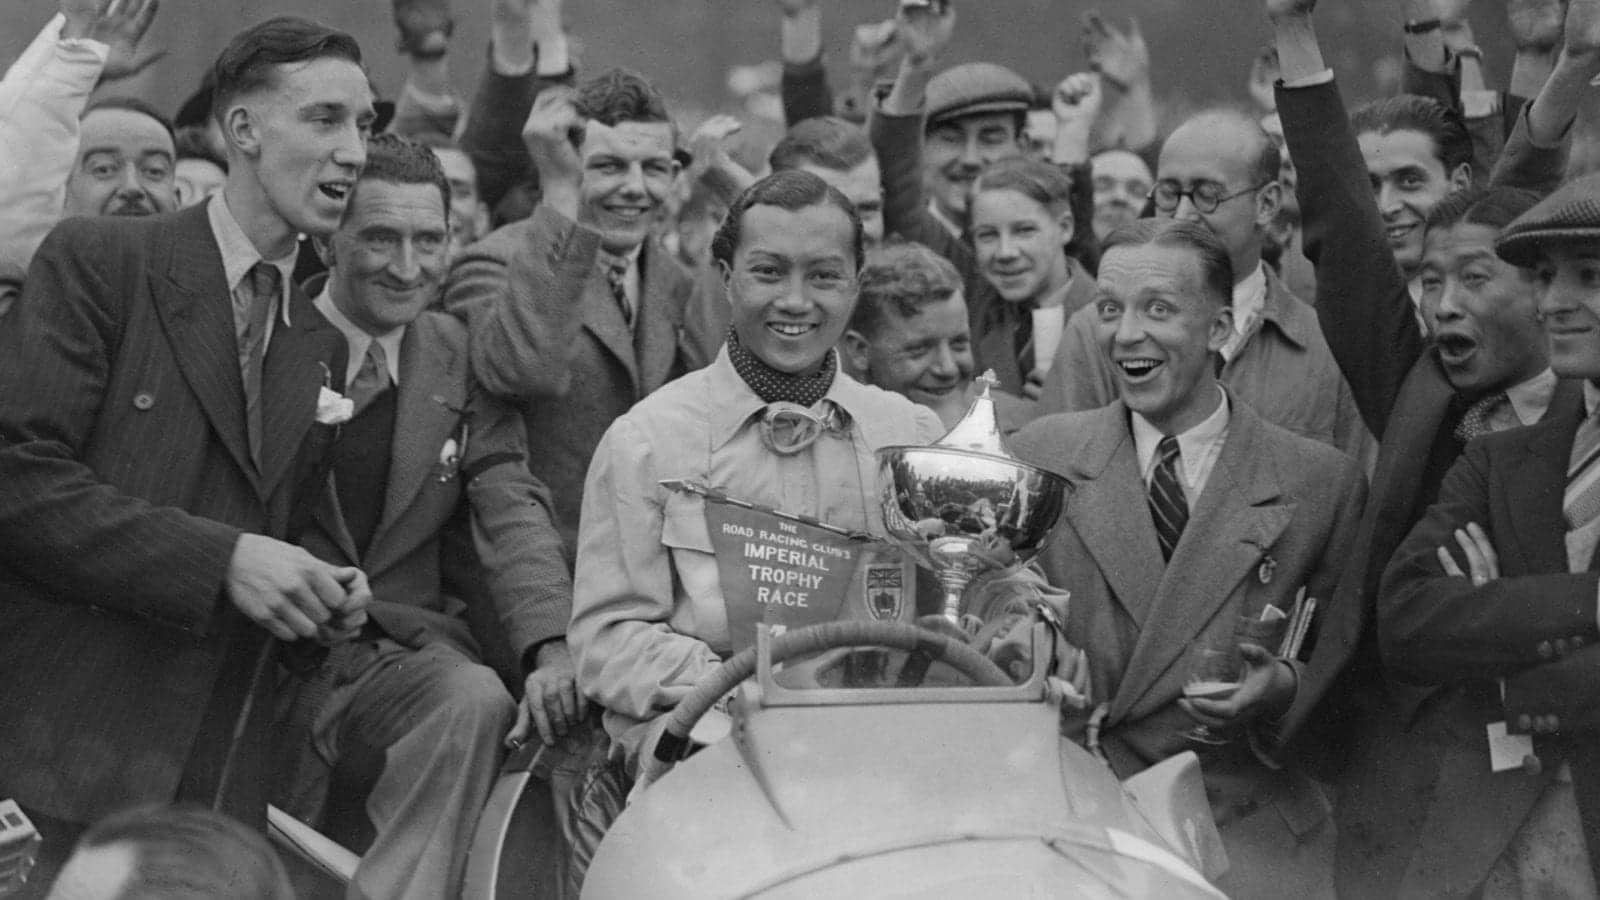 Prince Bira, 1937 Imperial Trophy race